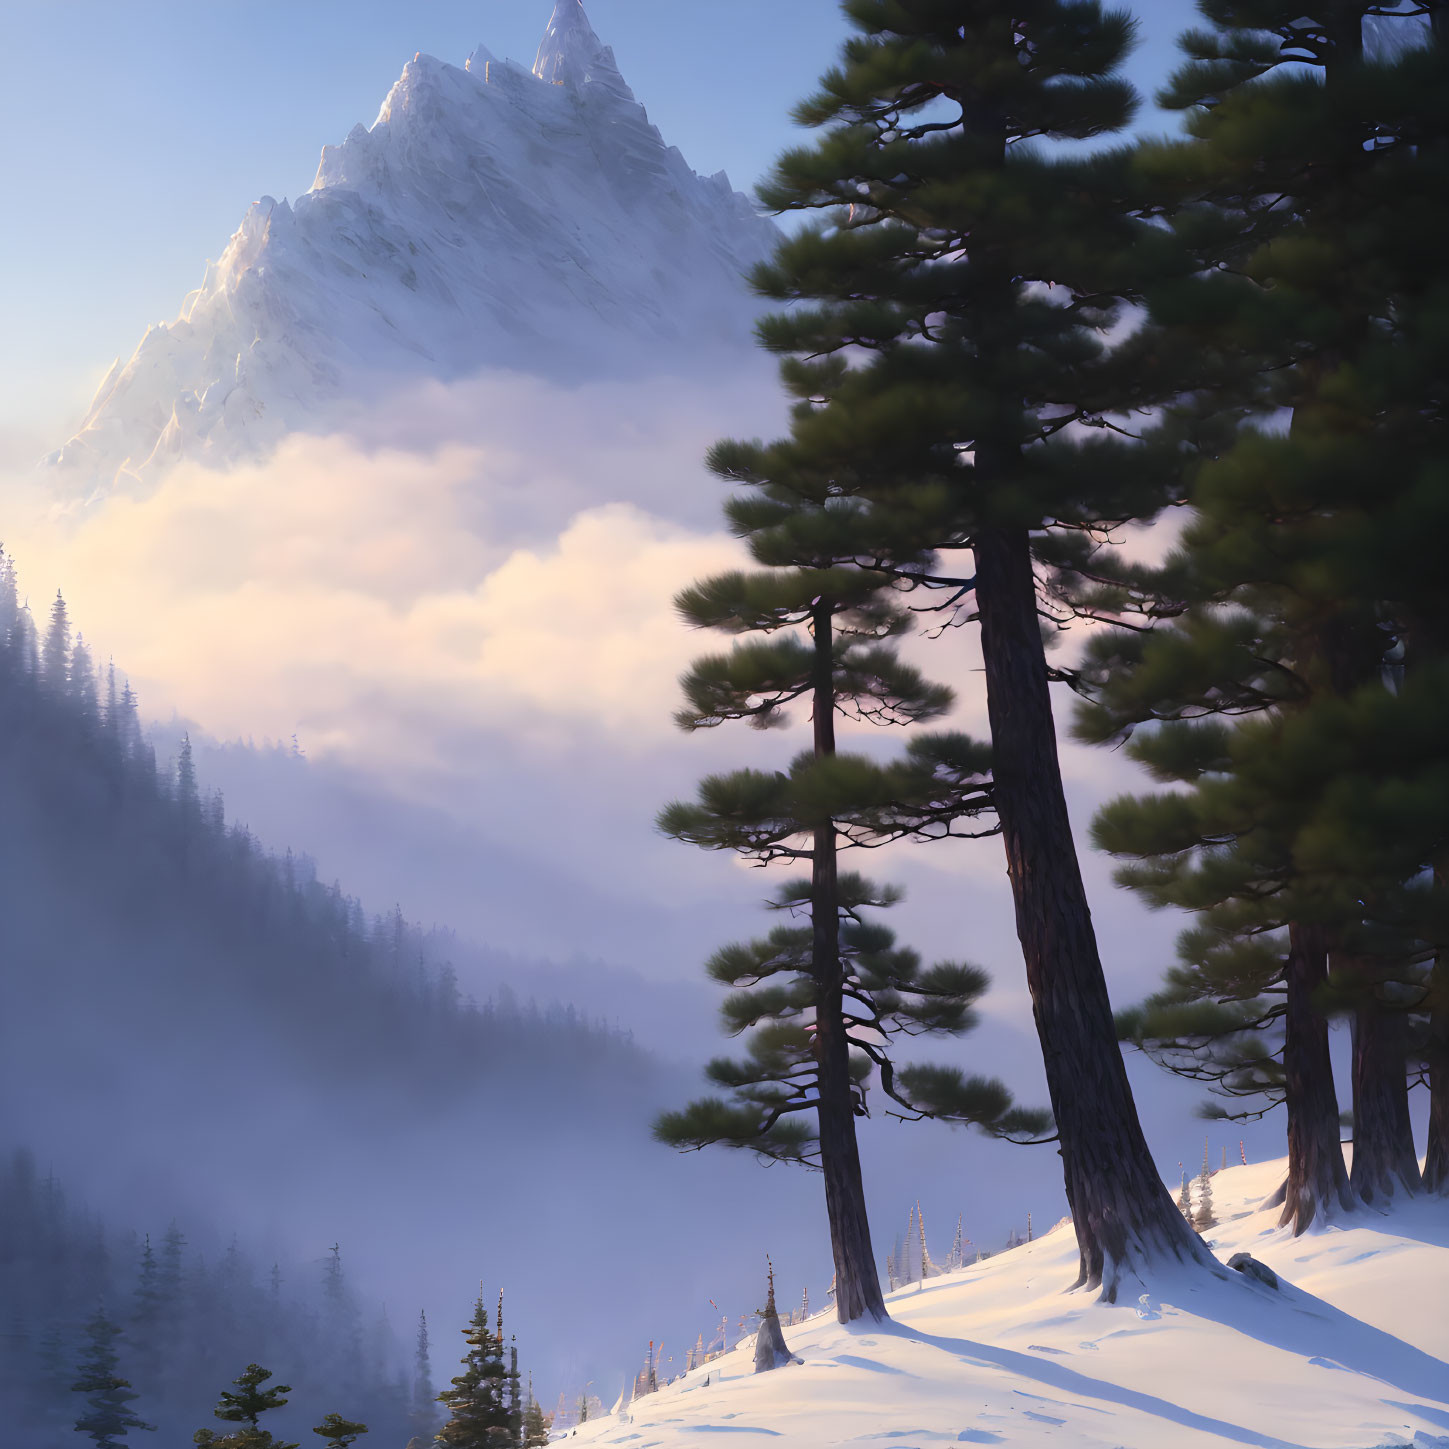 Winter Scene: Snowy Pine Trees & Mountain Peak